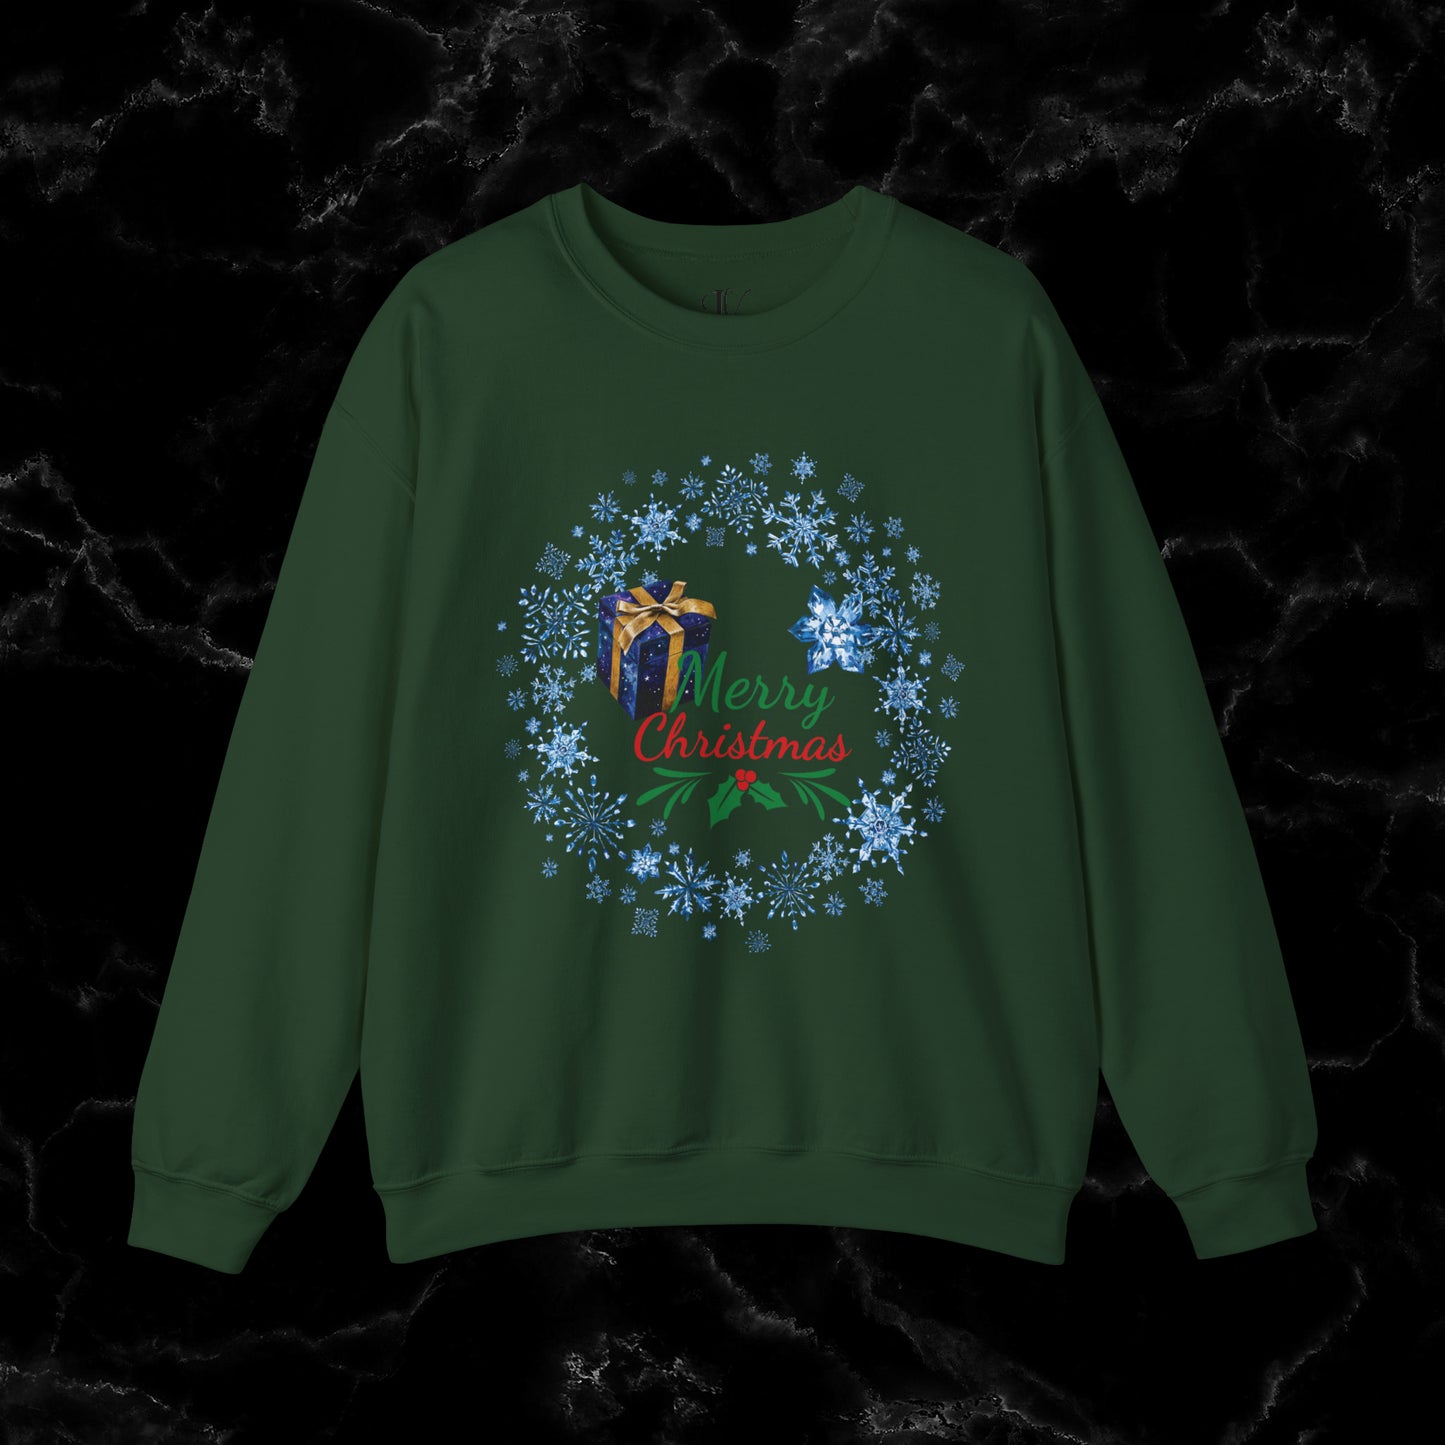 Merry Christmas Sweatshirt - Matching Christmas Shirt, Wreath Design, Holiday Gift Sweatshirt S Forest Green 